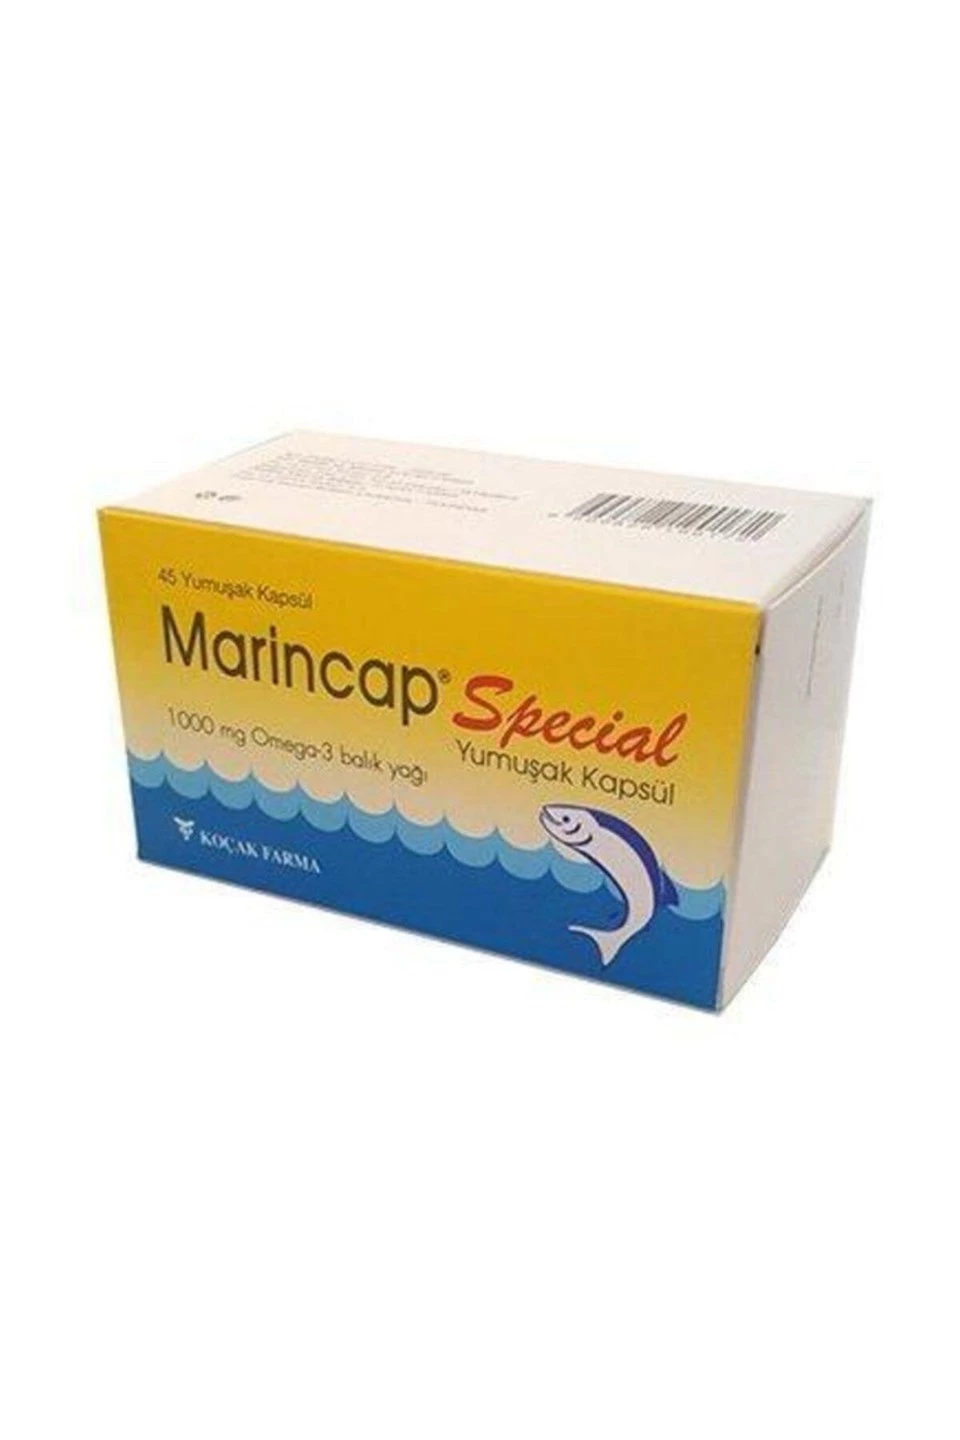 Marincap Marıncap 1000 Mg Specıal 45 Kapsül